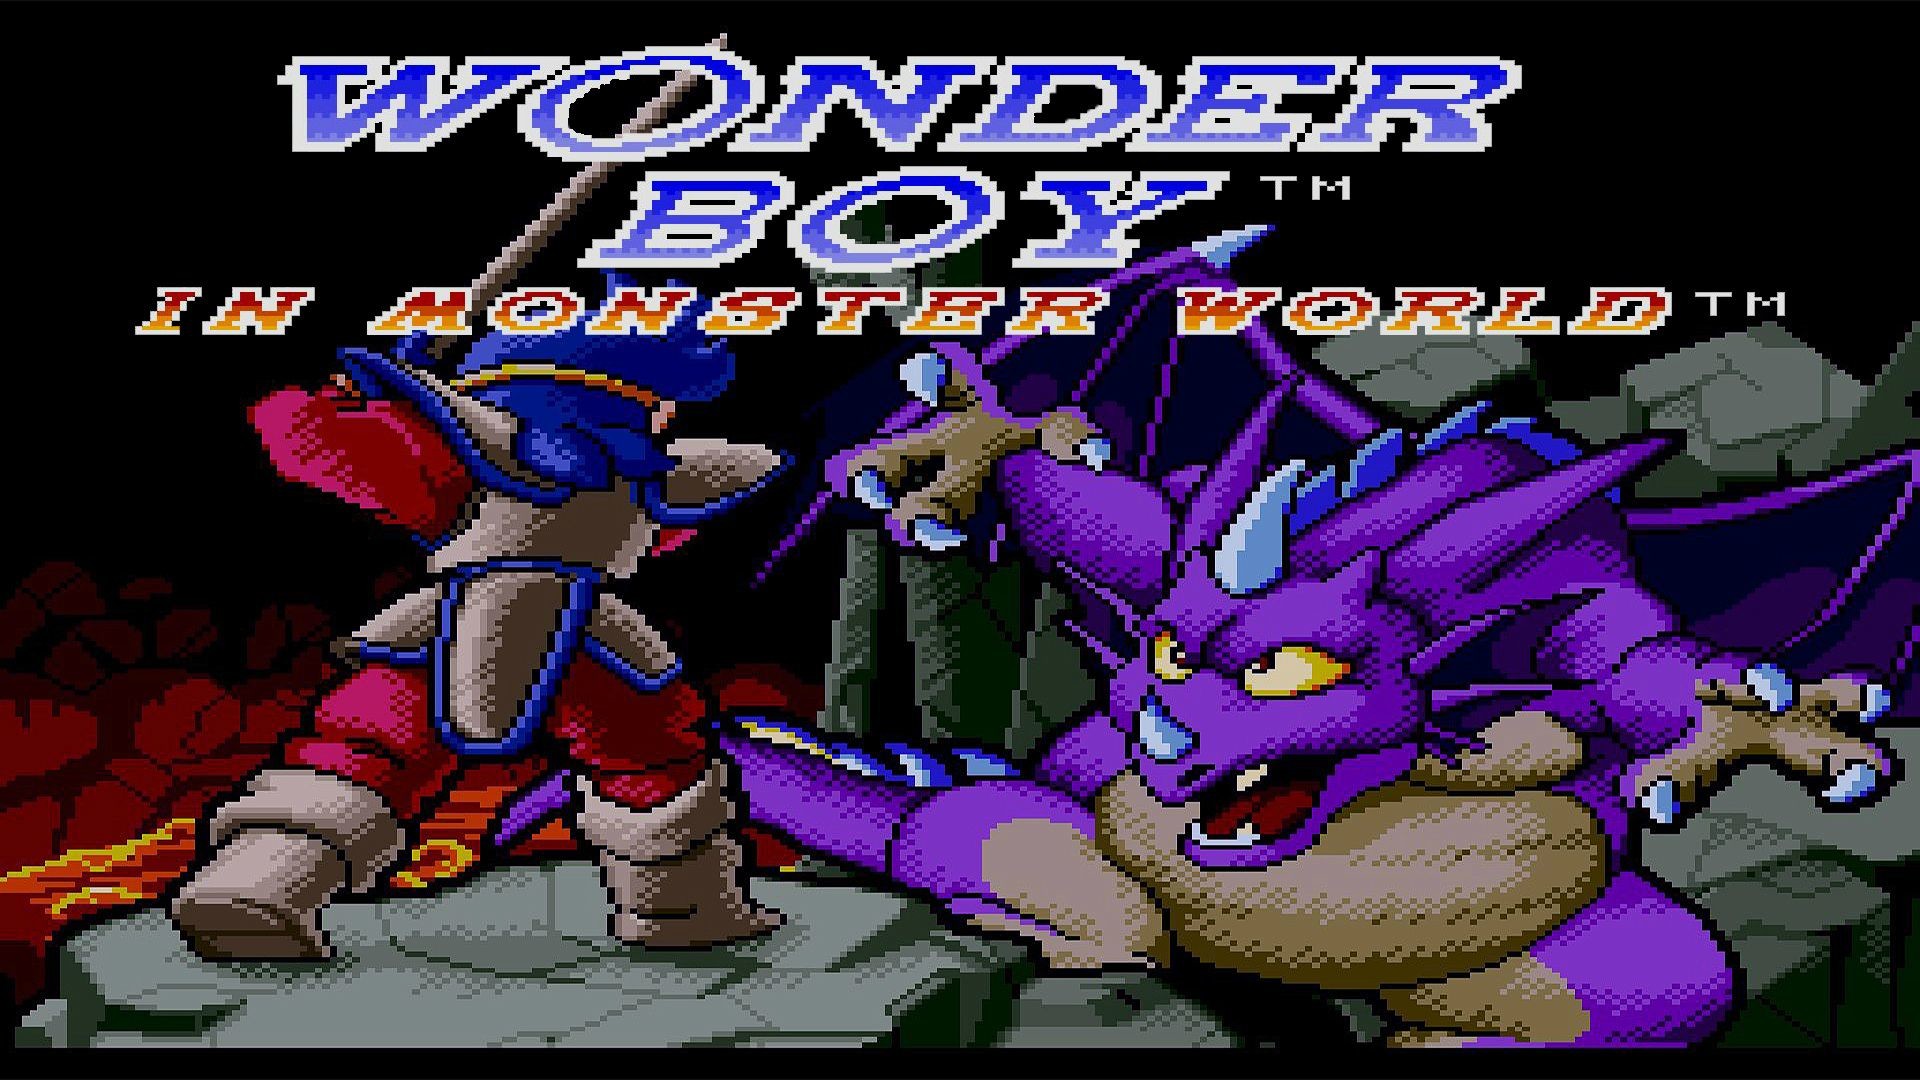 1920x1080 Wonder Boy in Monster World Title Screen Wallpapers